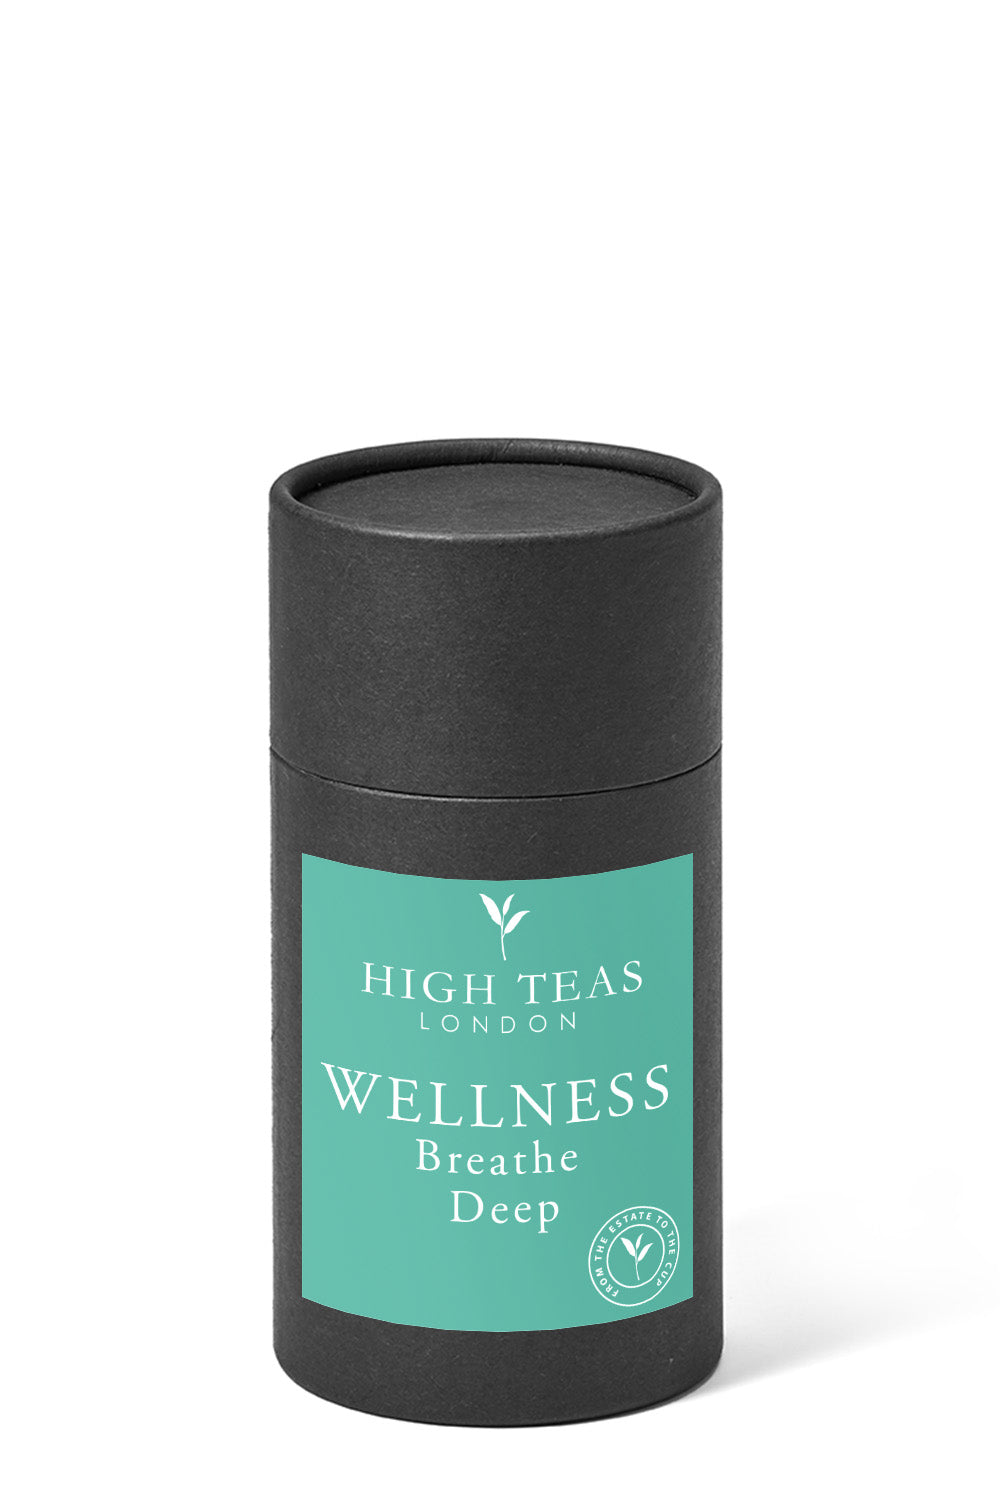 Breathe Deep-60g gift-Loose Leaf Tea-High Teas